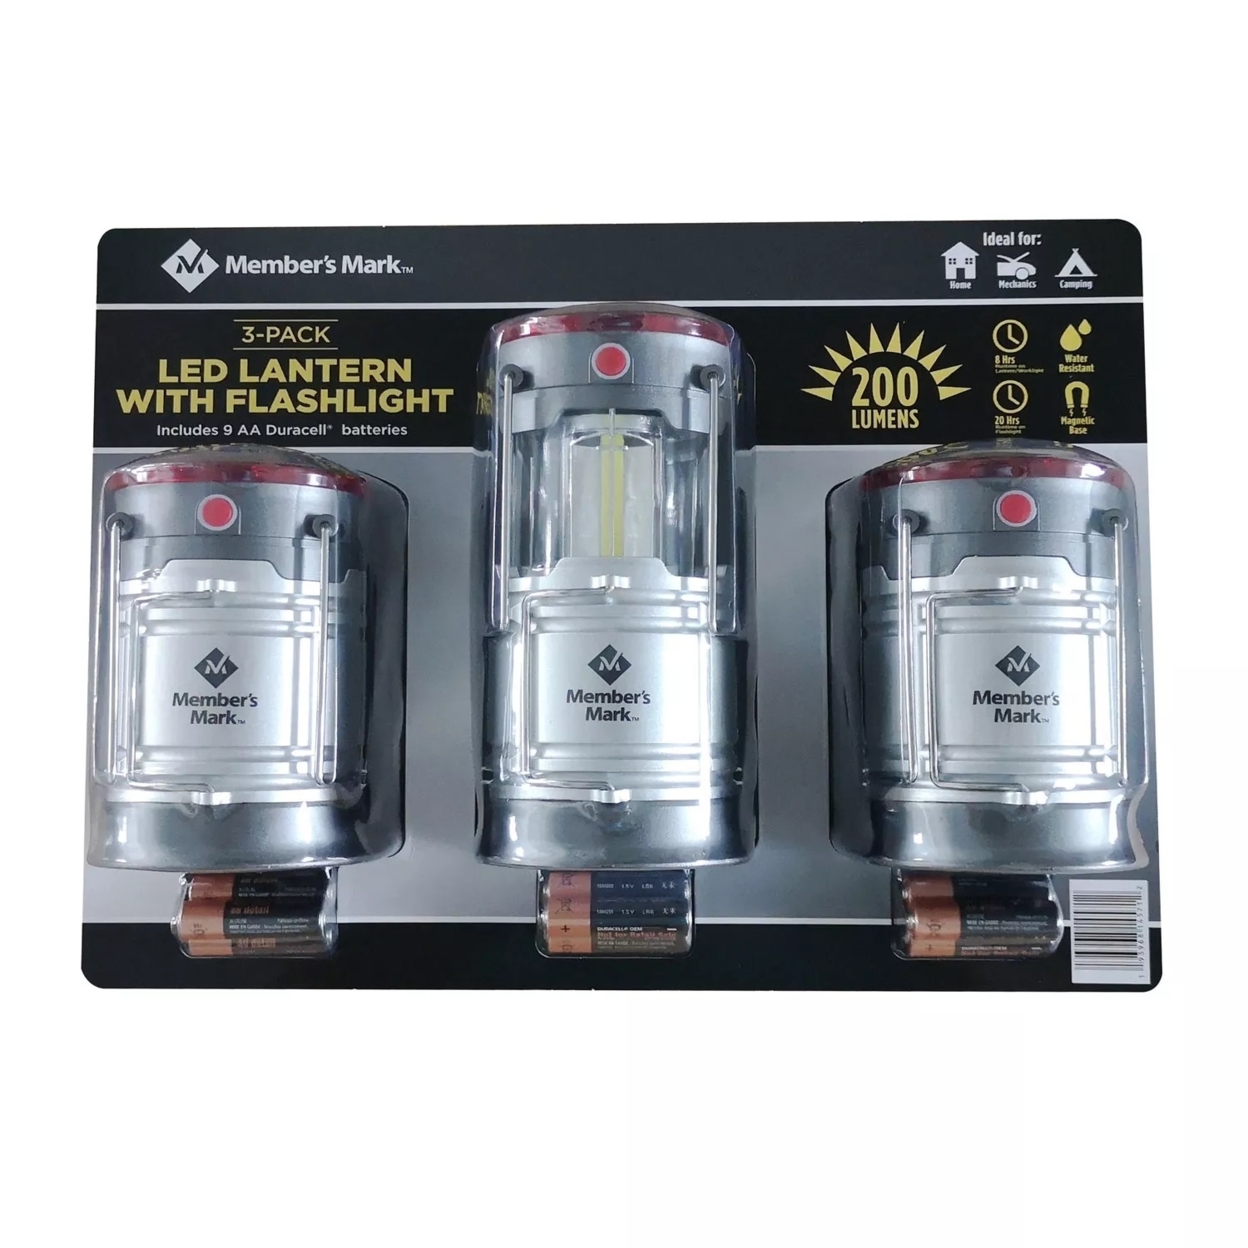 Member's Mark Lantern With Flashlight (3 Pack)